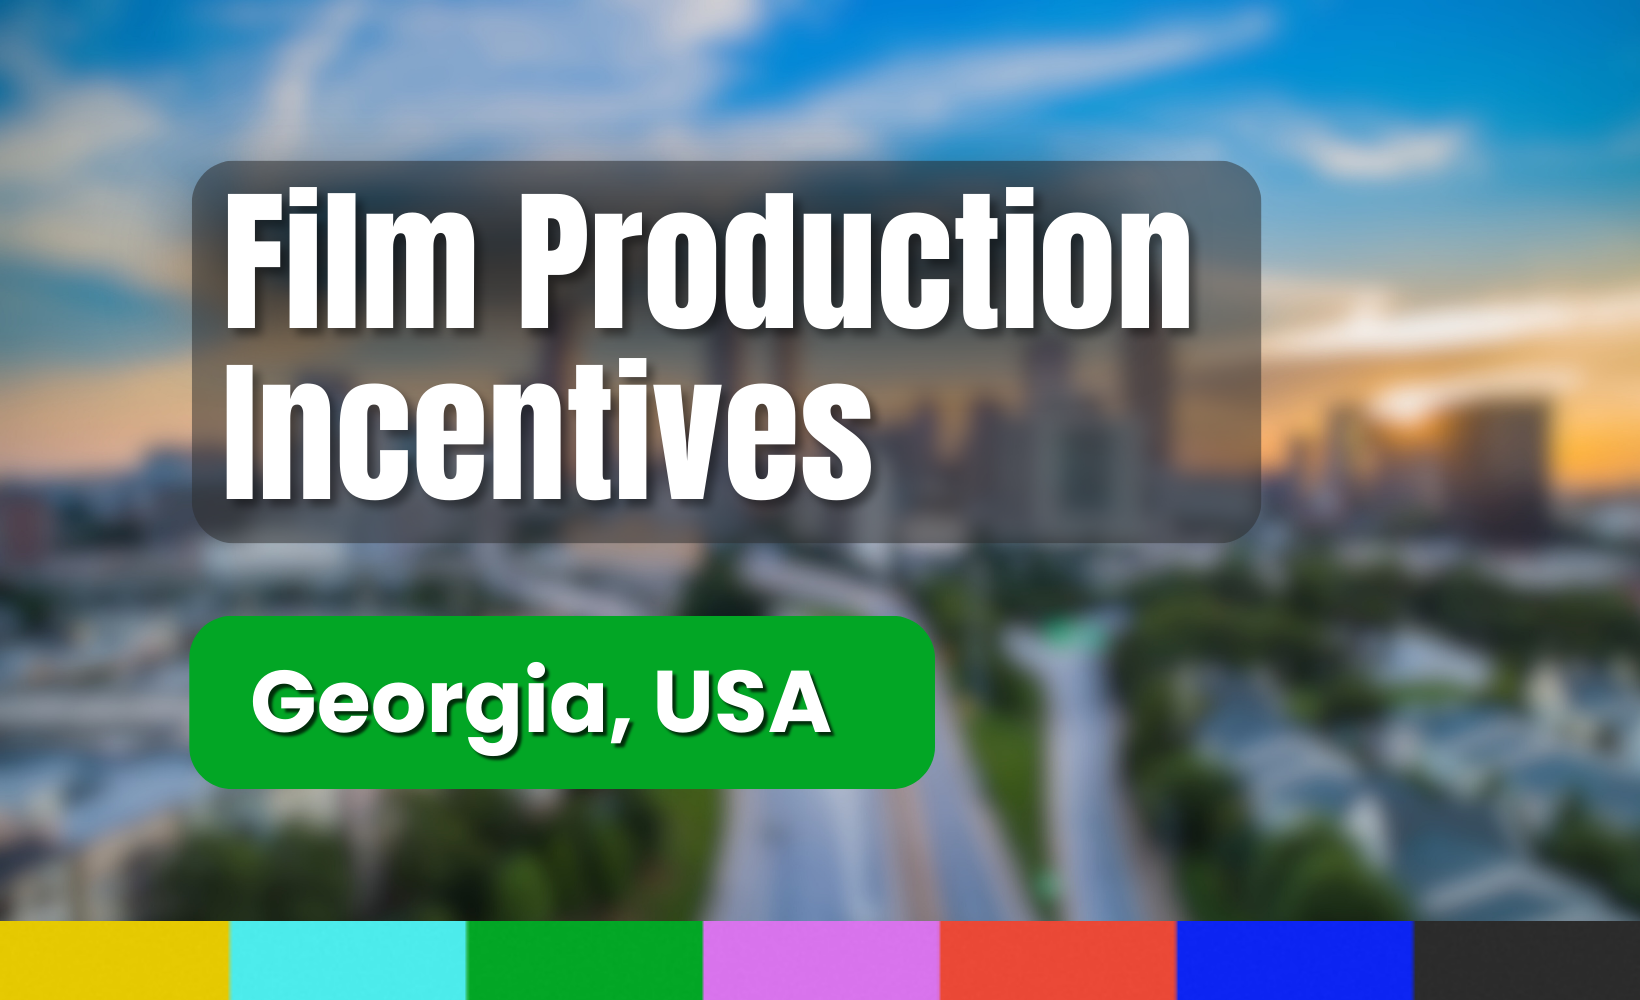 Thumbnail - Film Production Incentives - Georgia USA